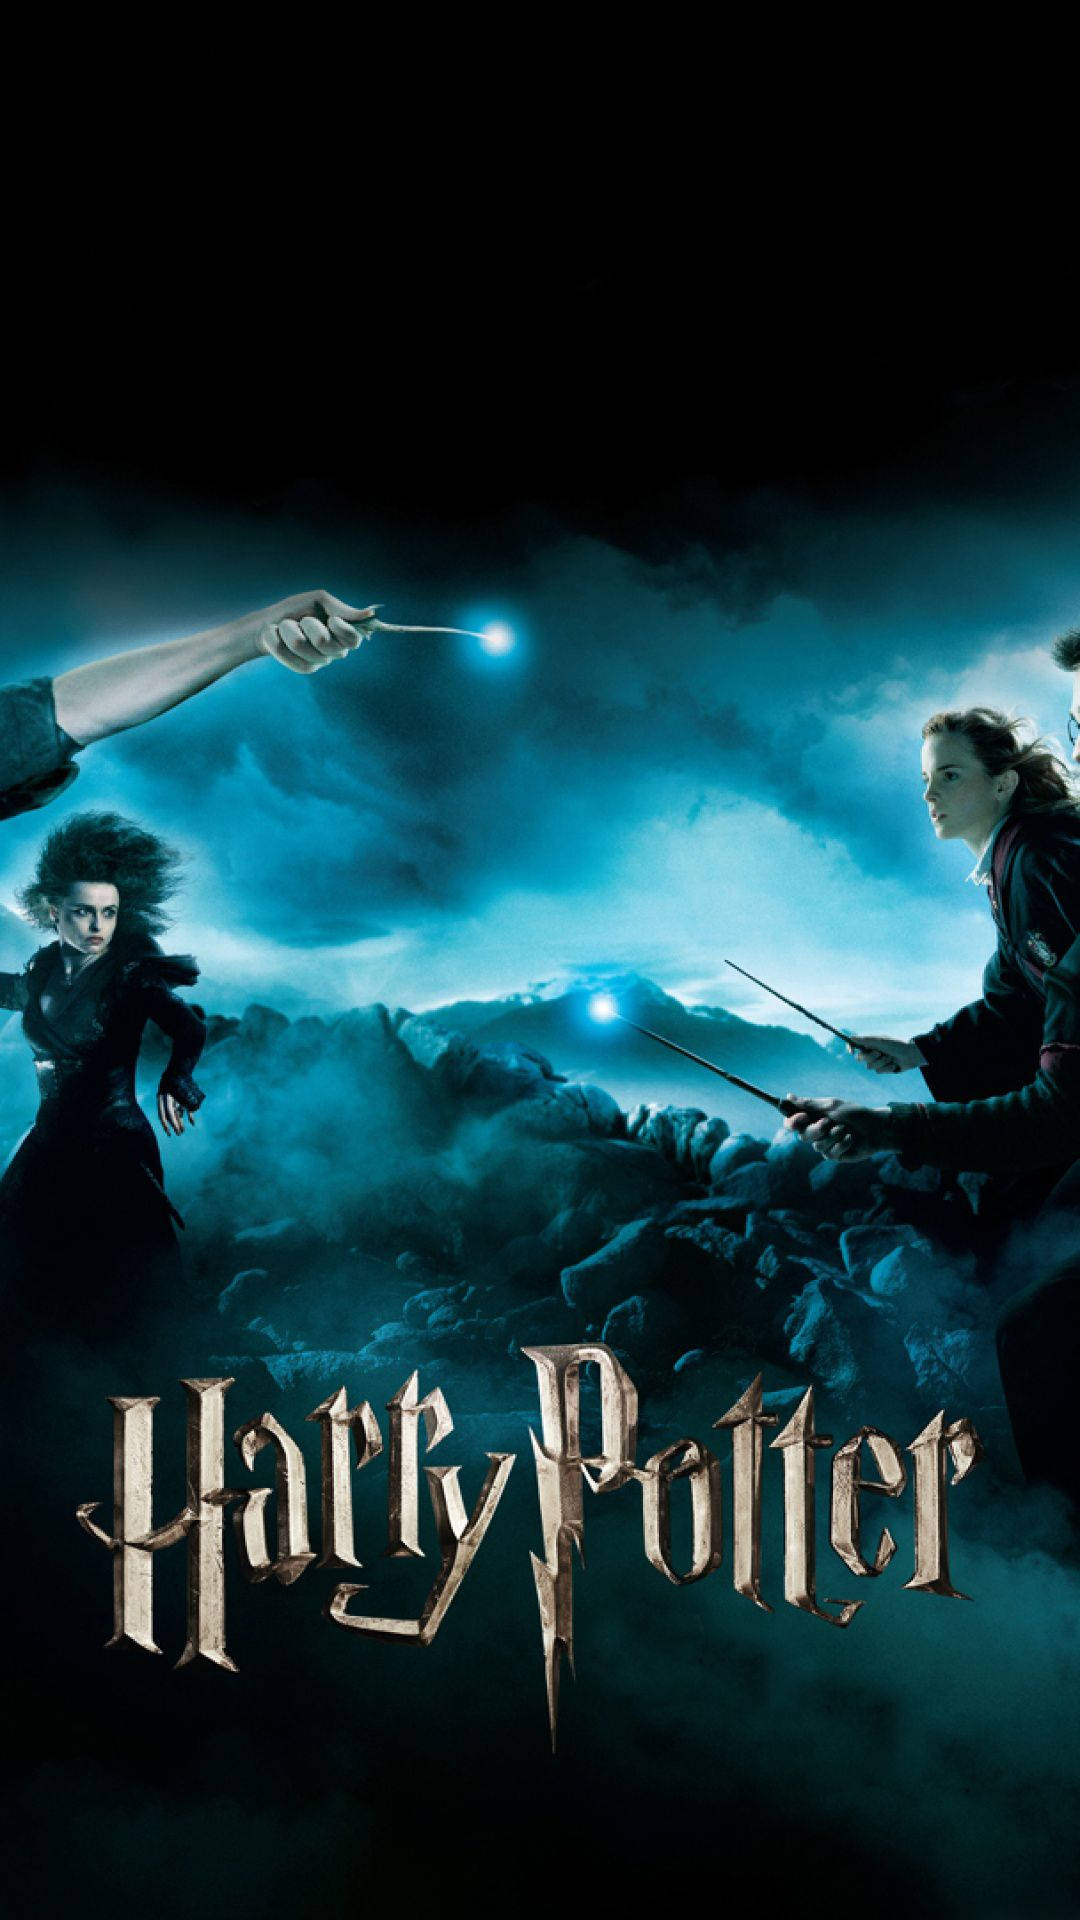 Harry Potter Movie Poster Background